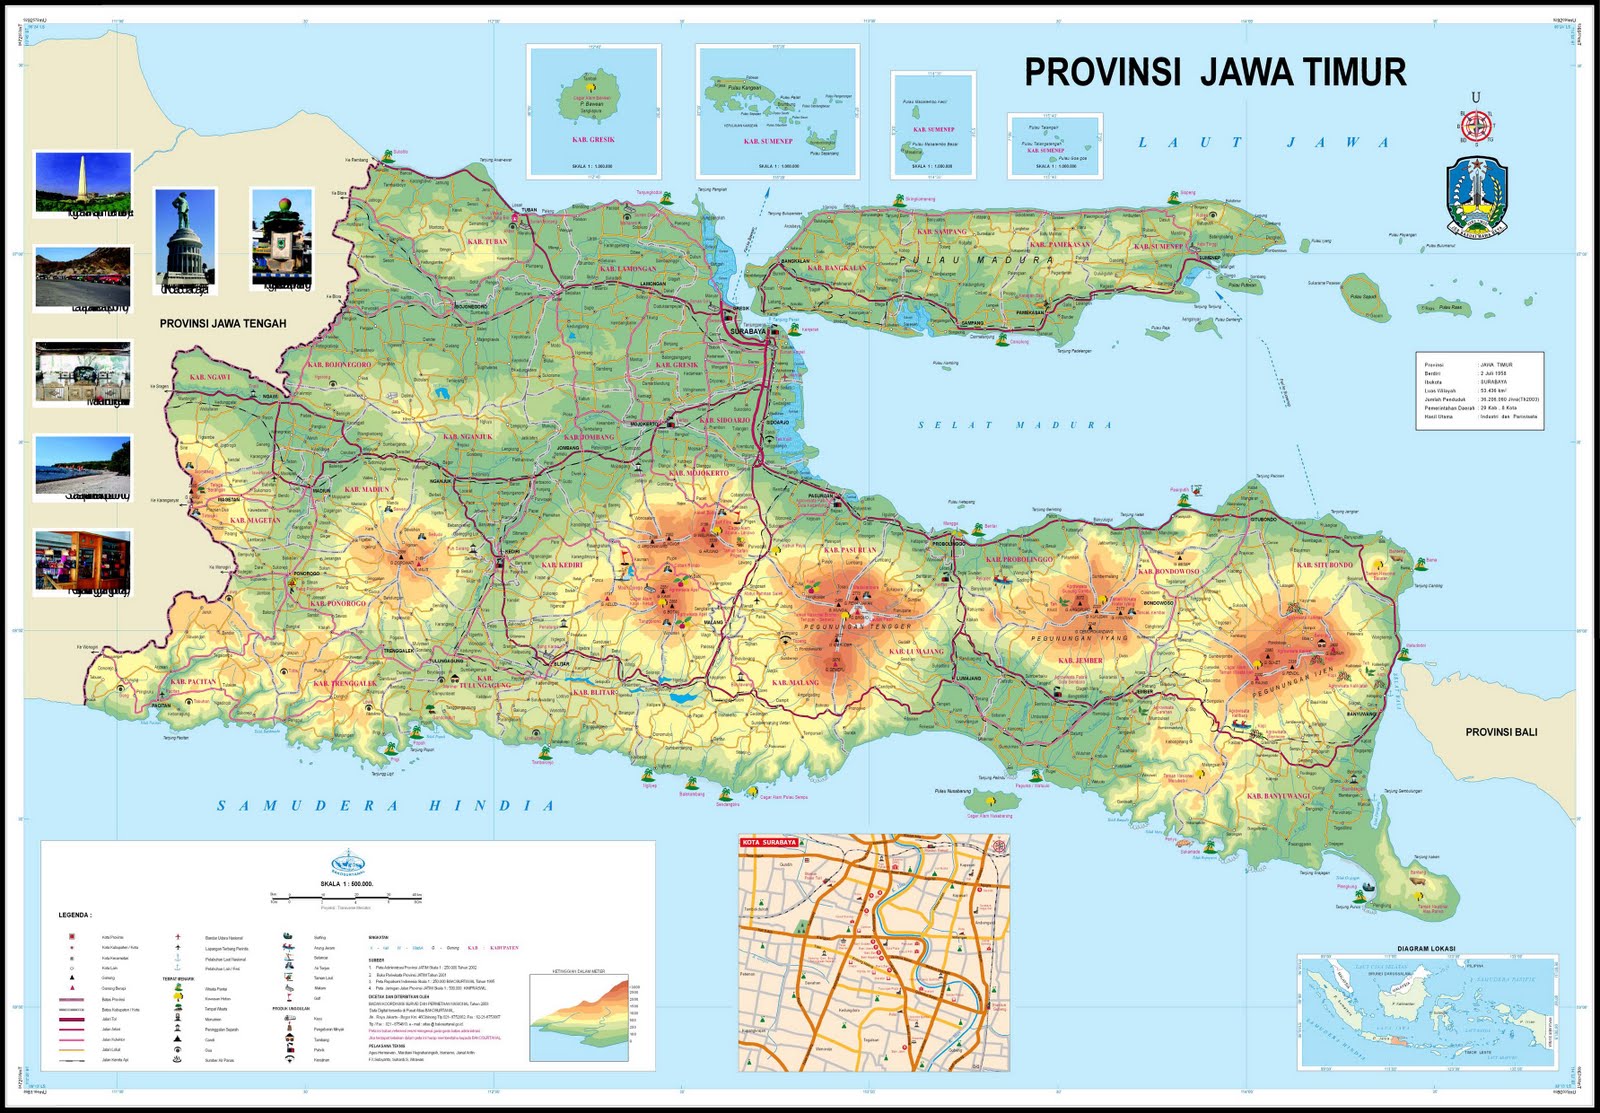 Peta Provinsi Jawa Timur (Jatim)